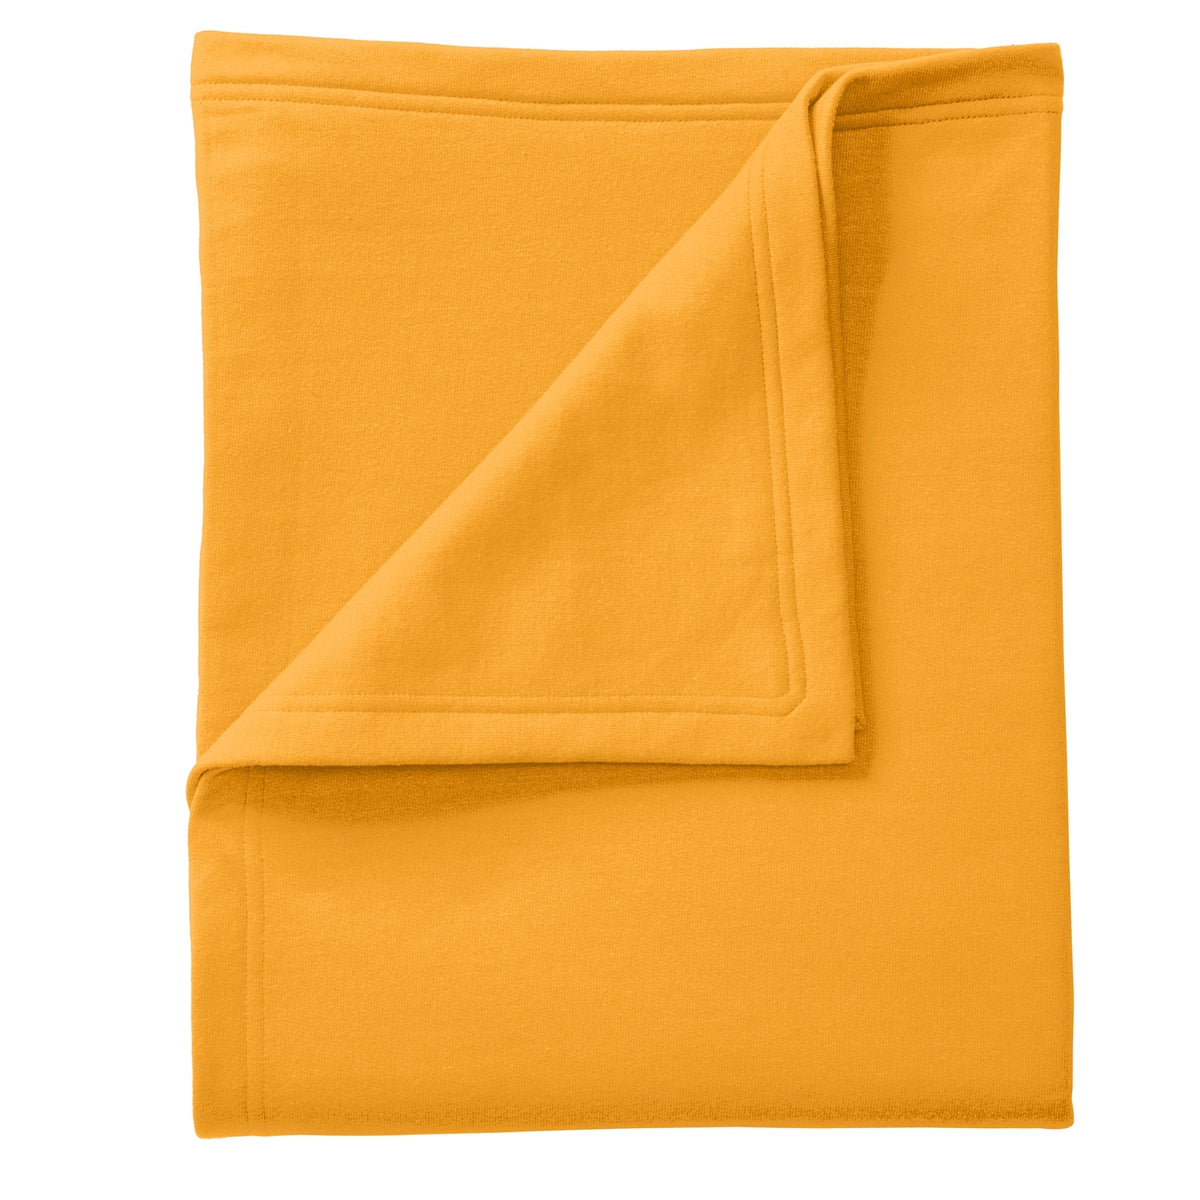 Core Fleece Sweatshirt Blanket - Gold